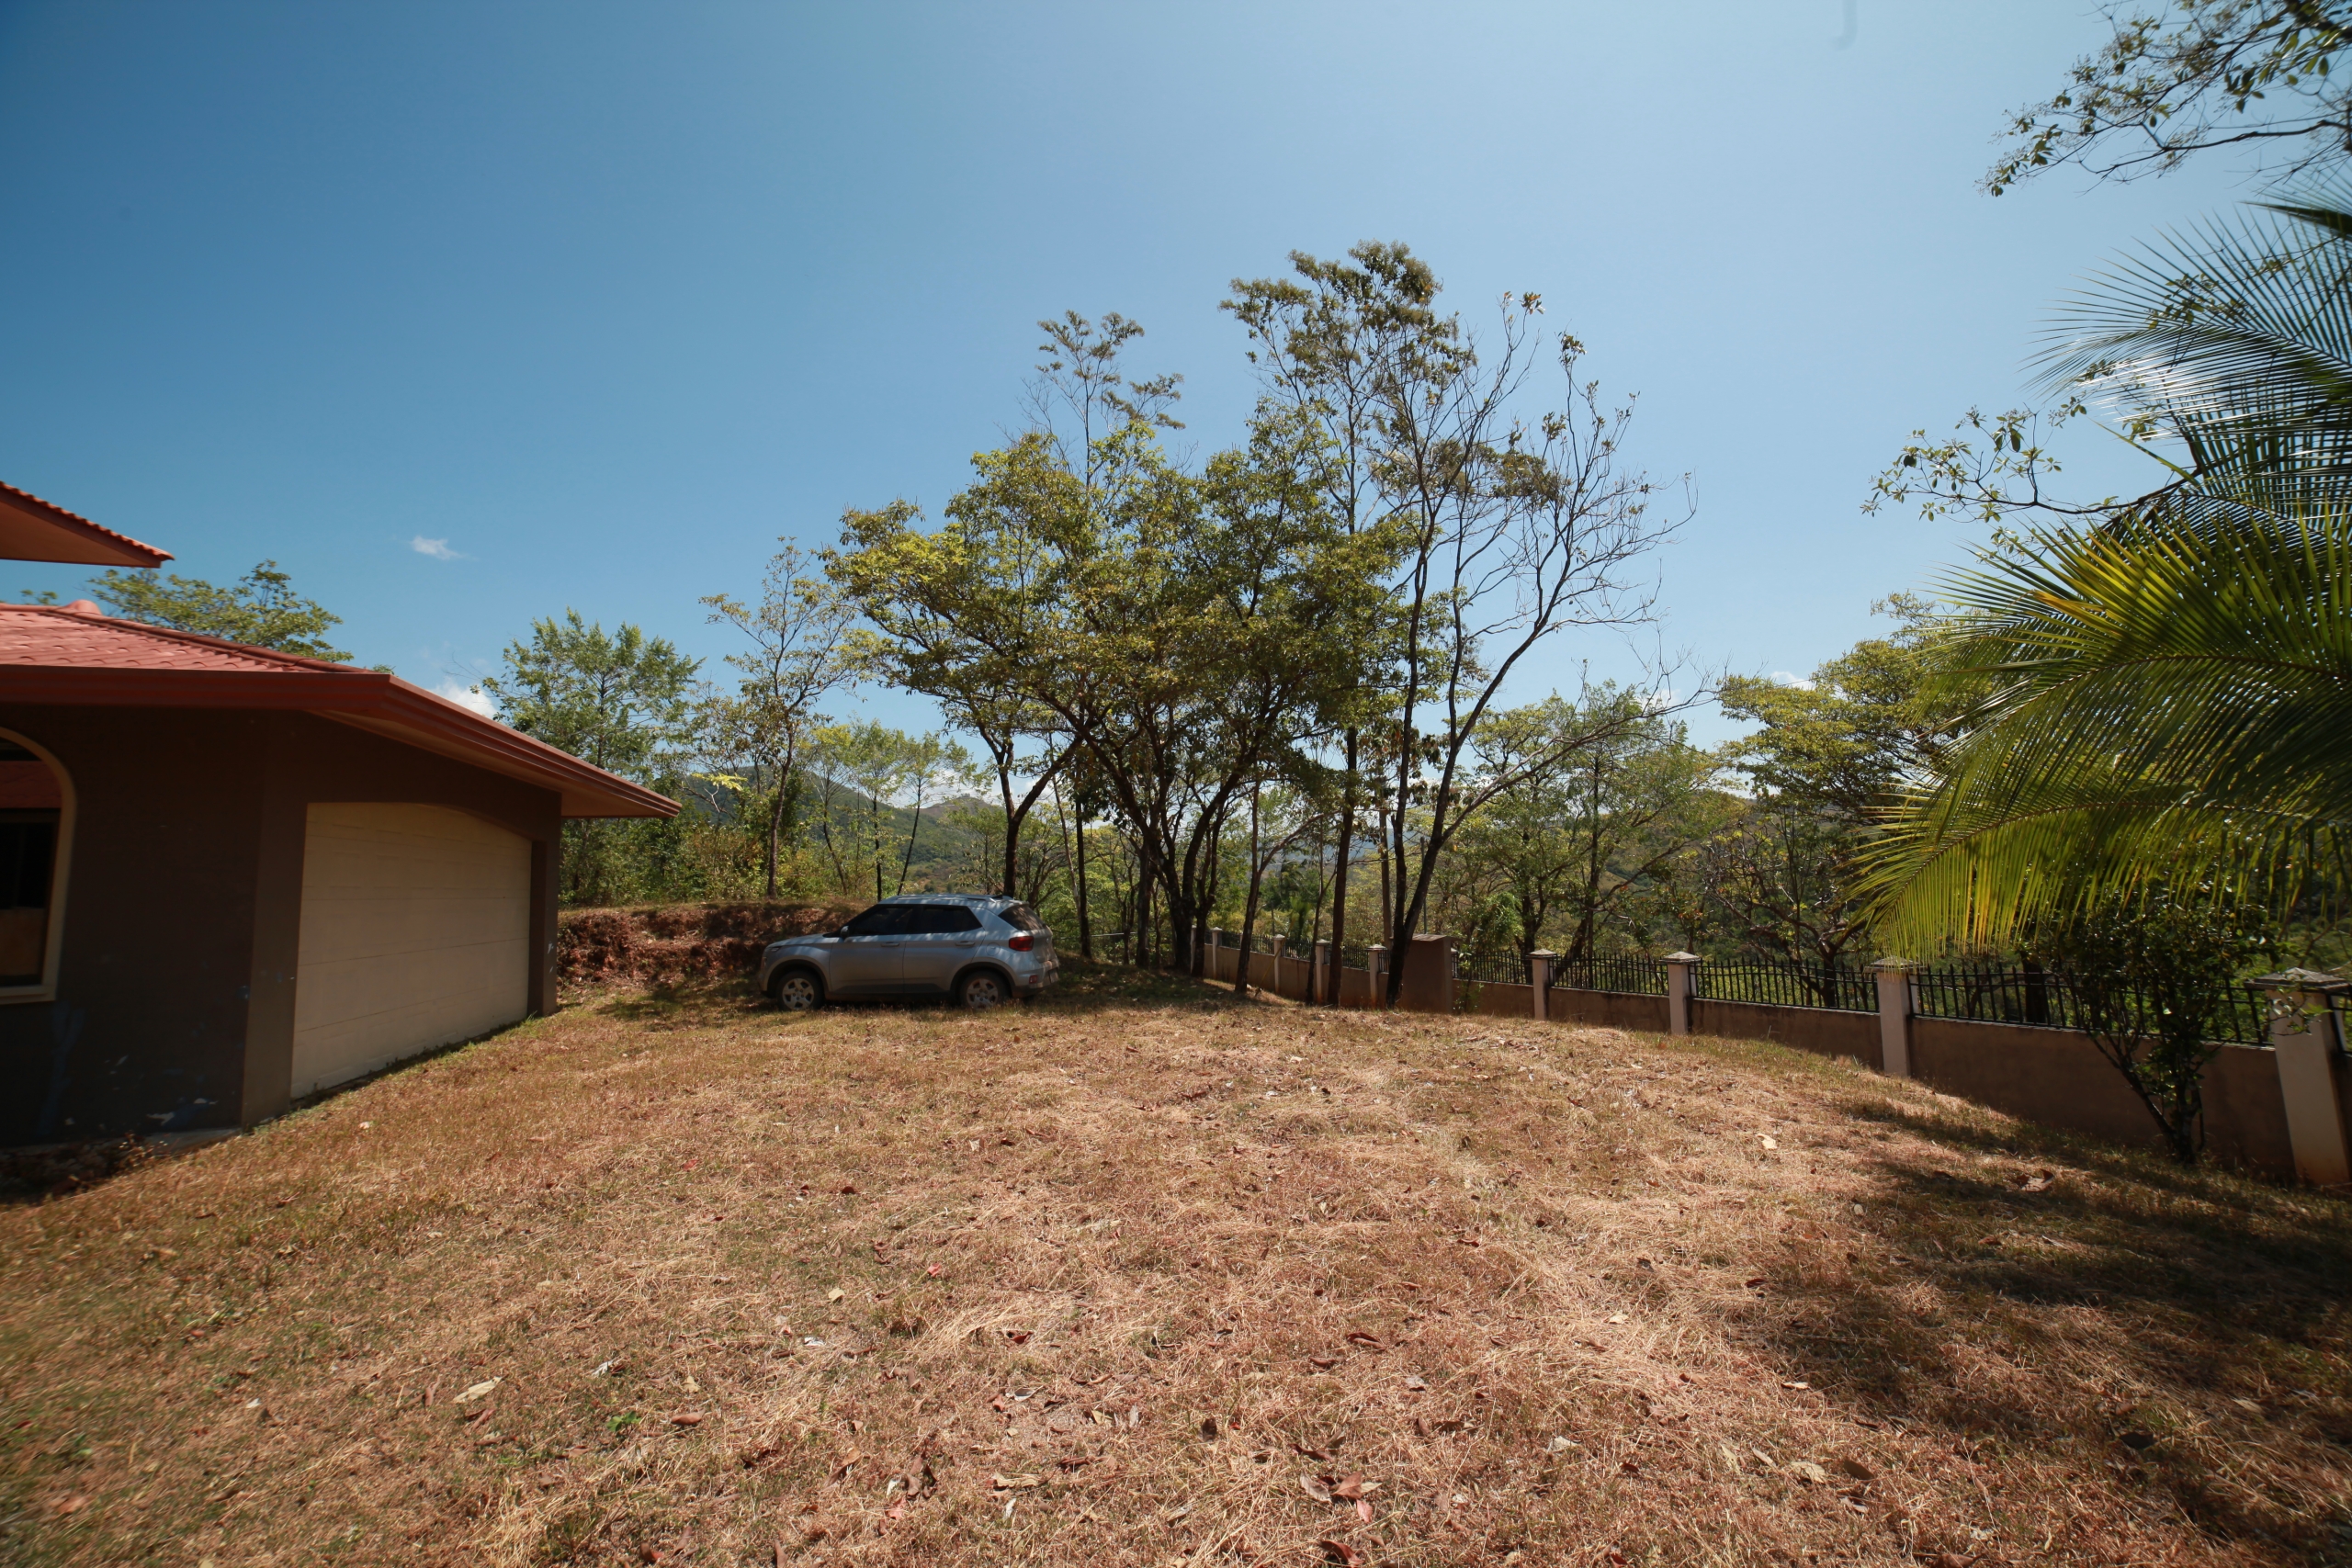 ocean view mountain home for sale in Mariato veraguas Panama real estate